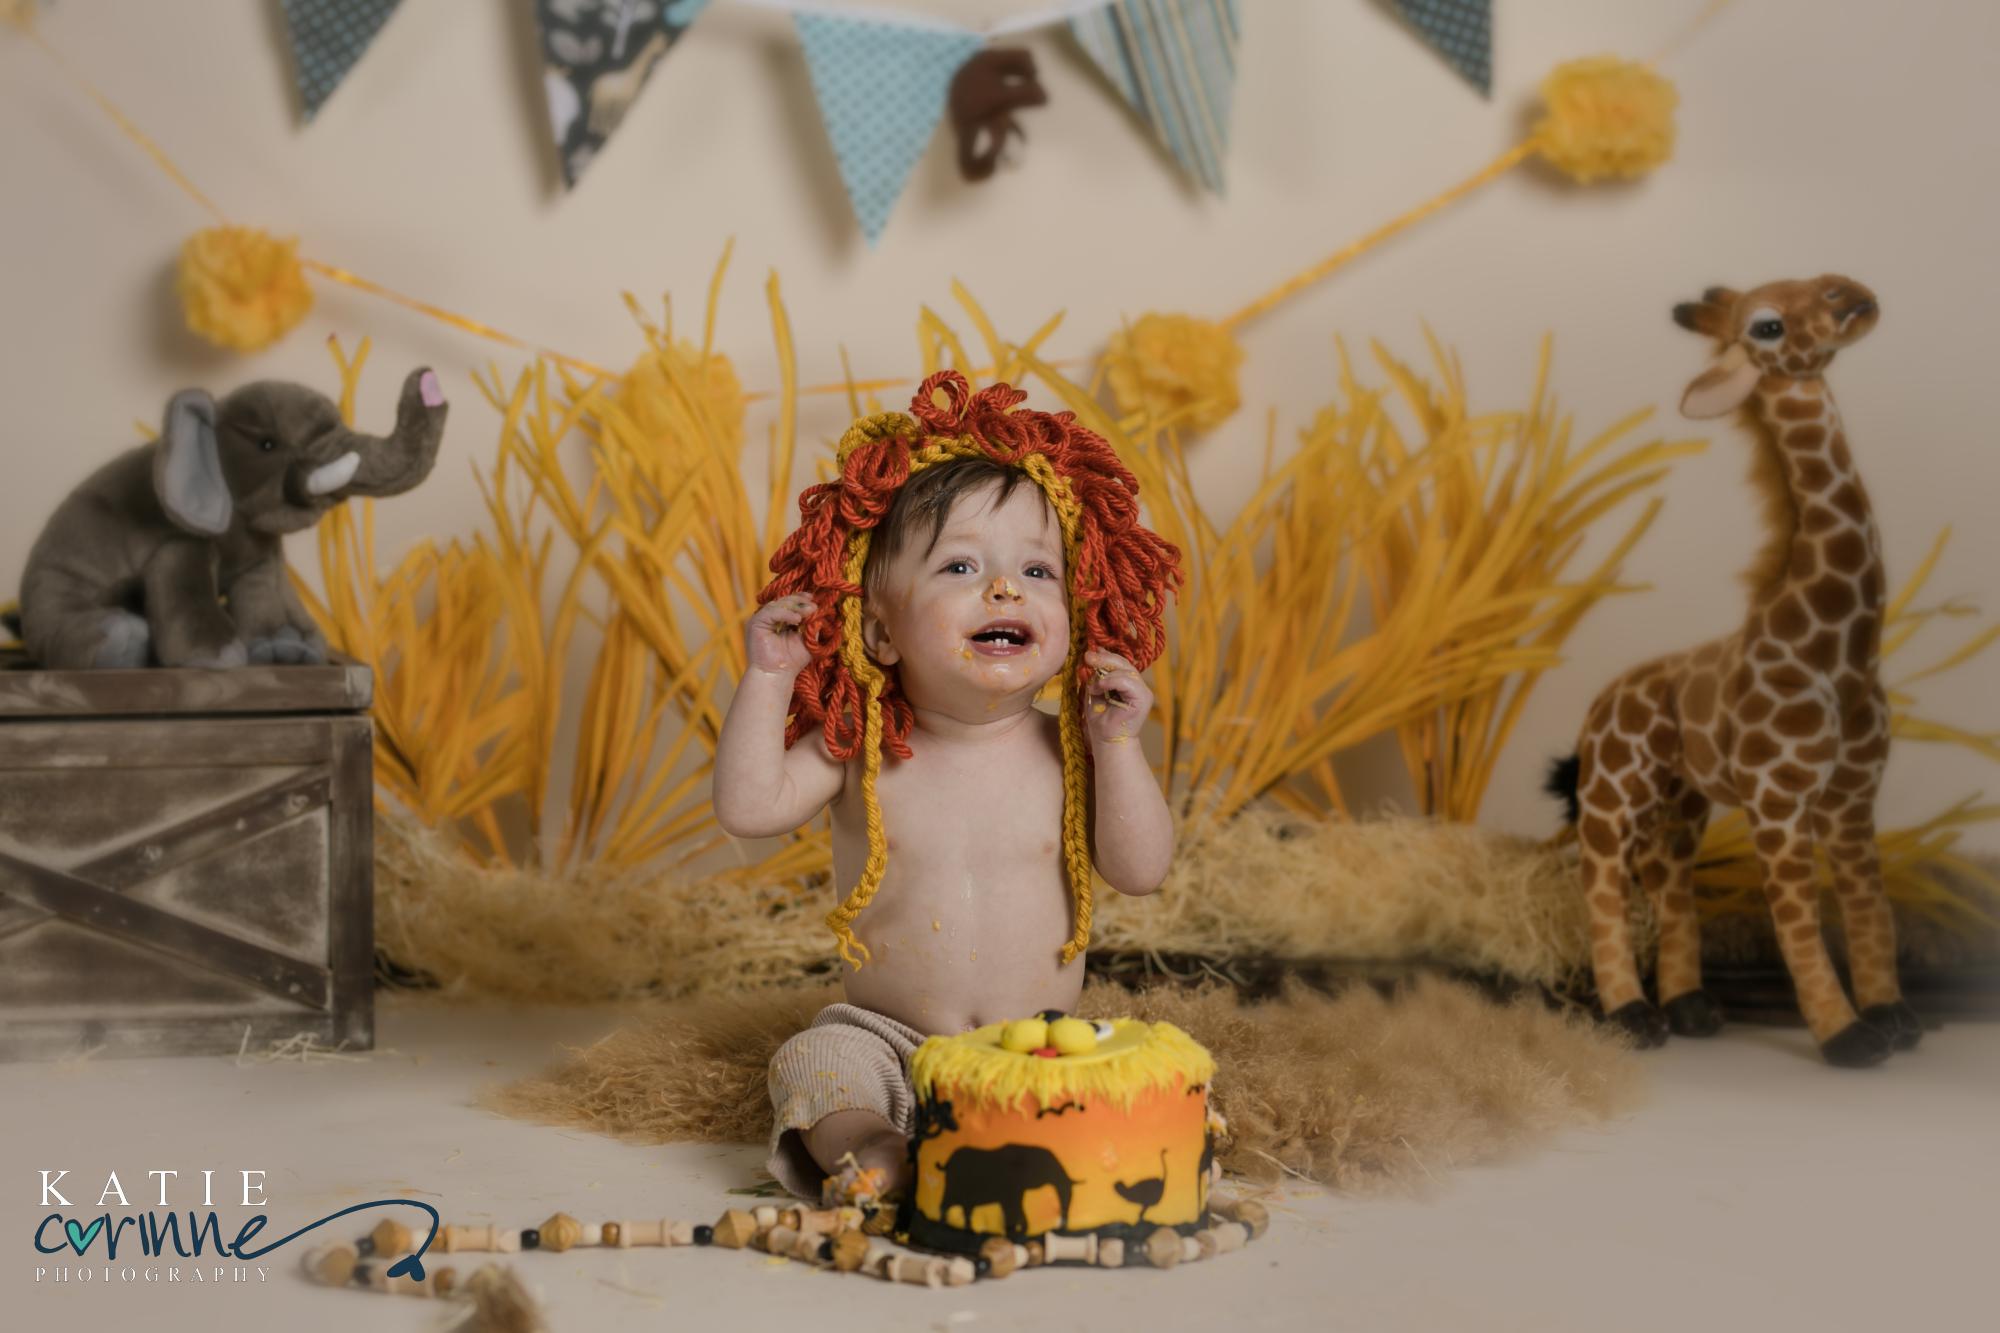 Colorado baby dressed as lion celebrates one year milestone